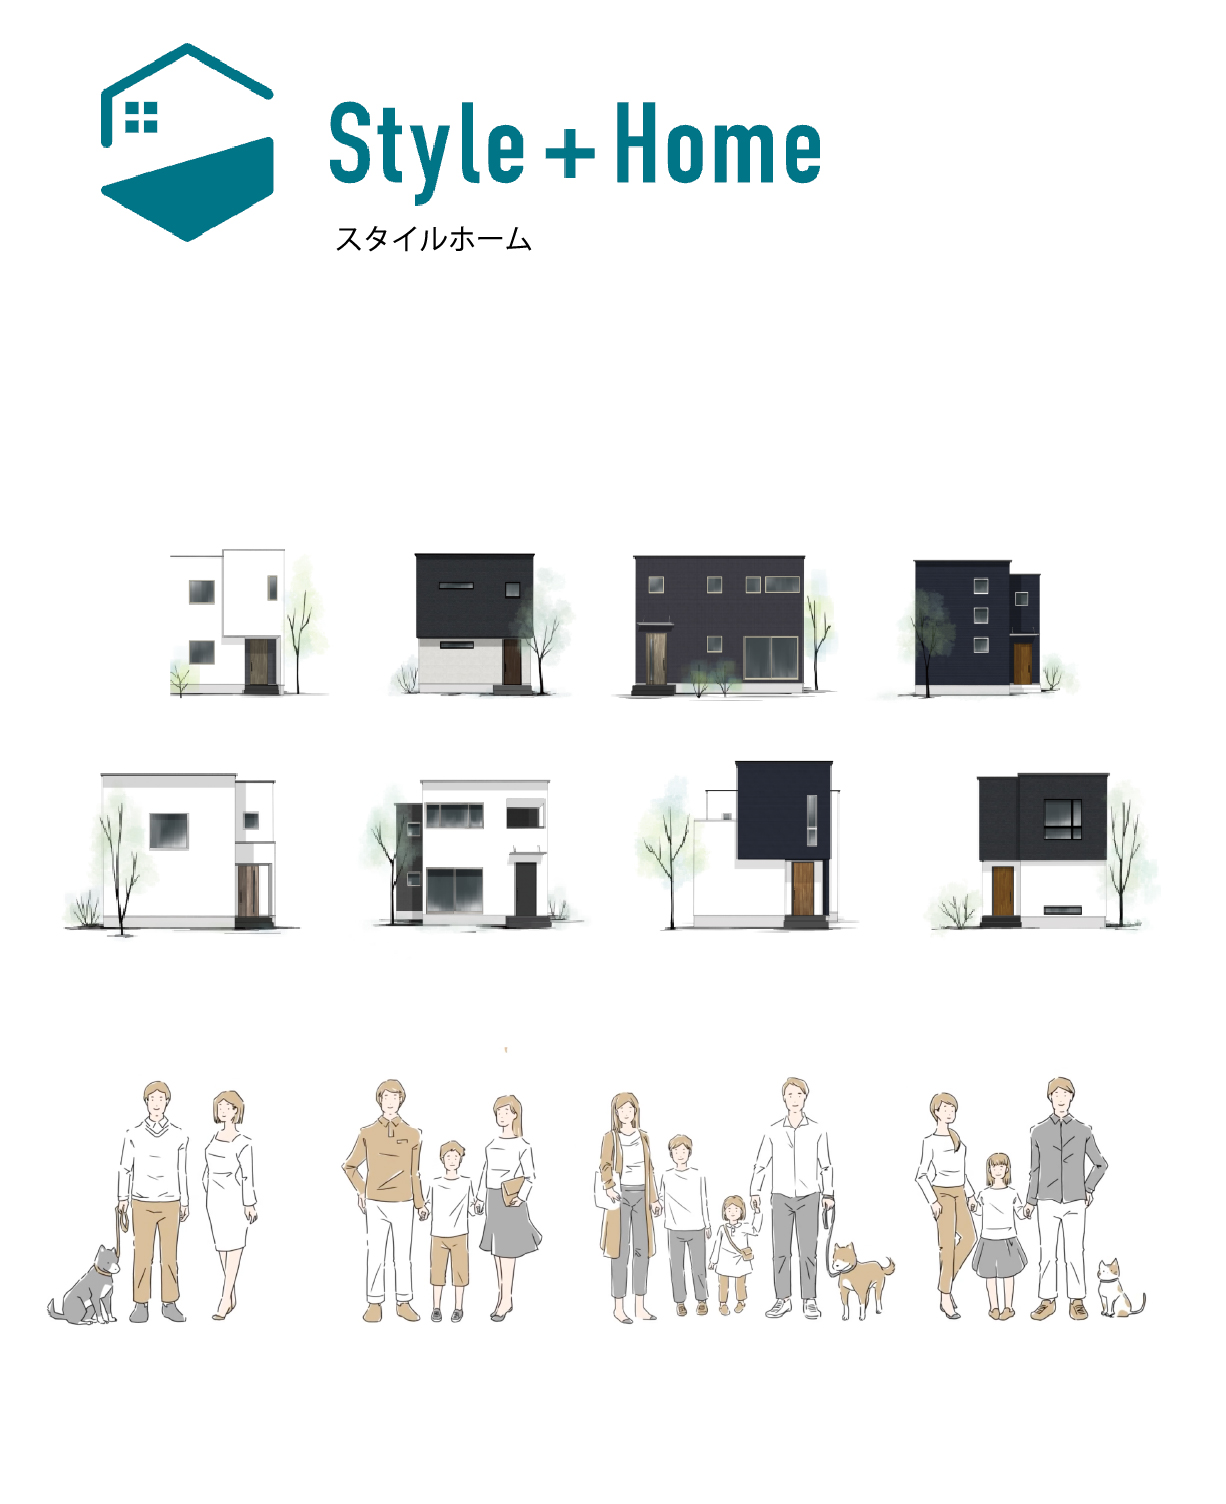 Style+Home(スタイルホーム)